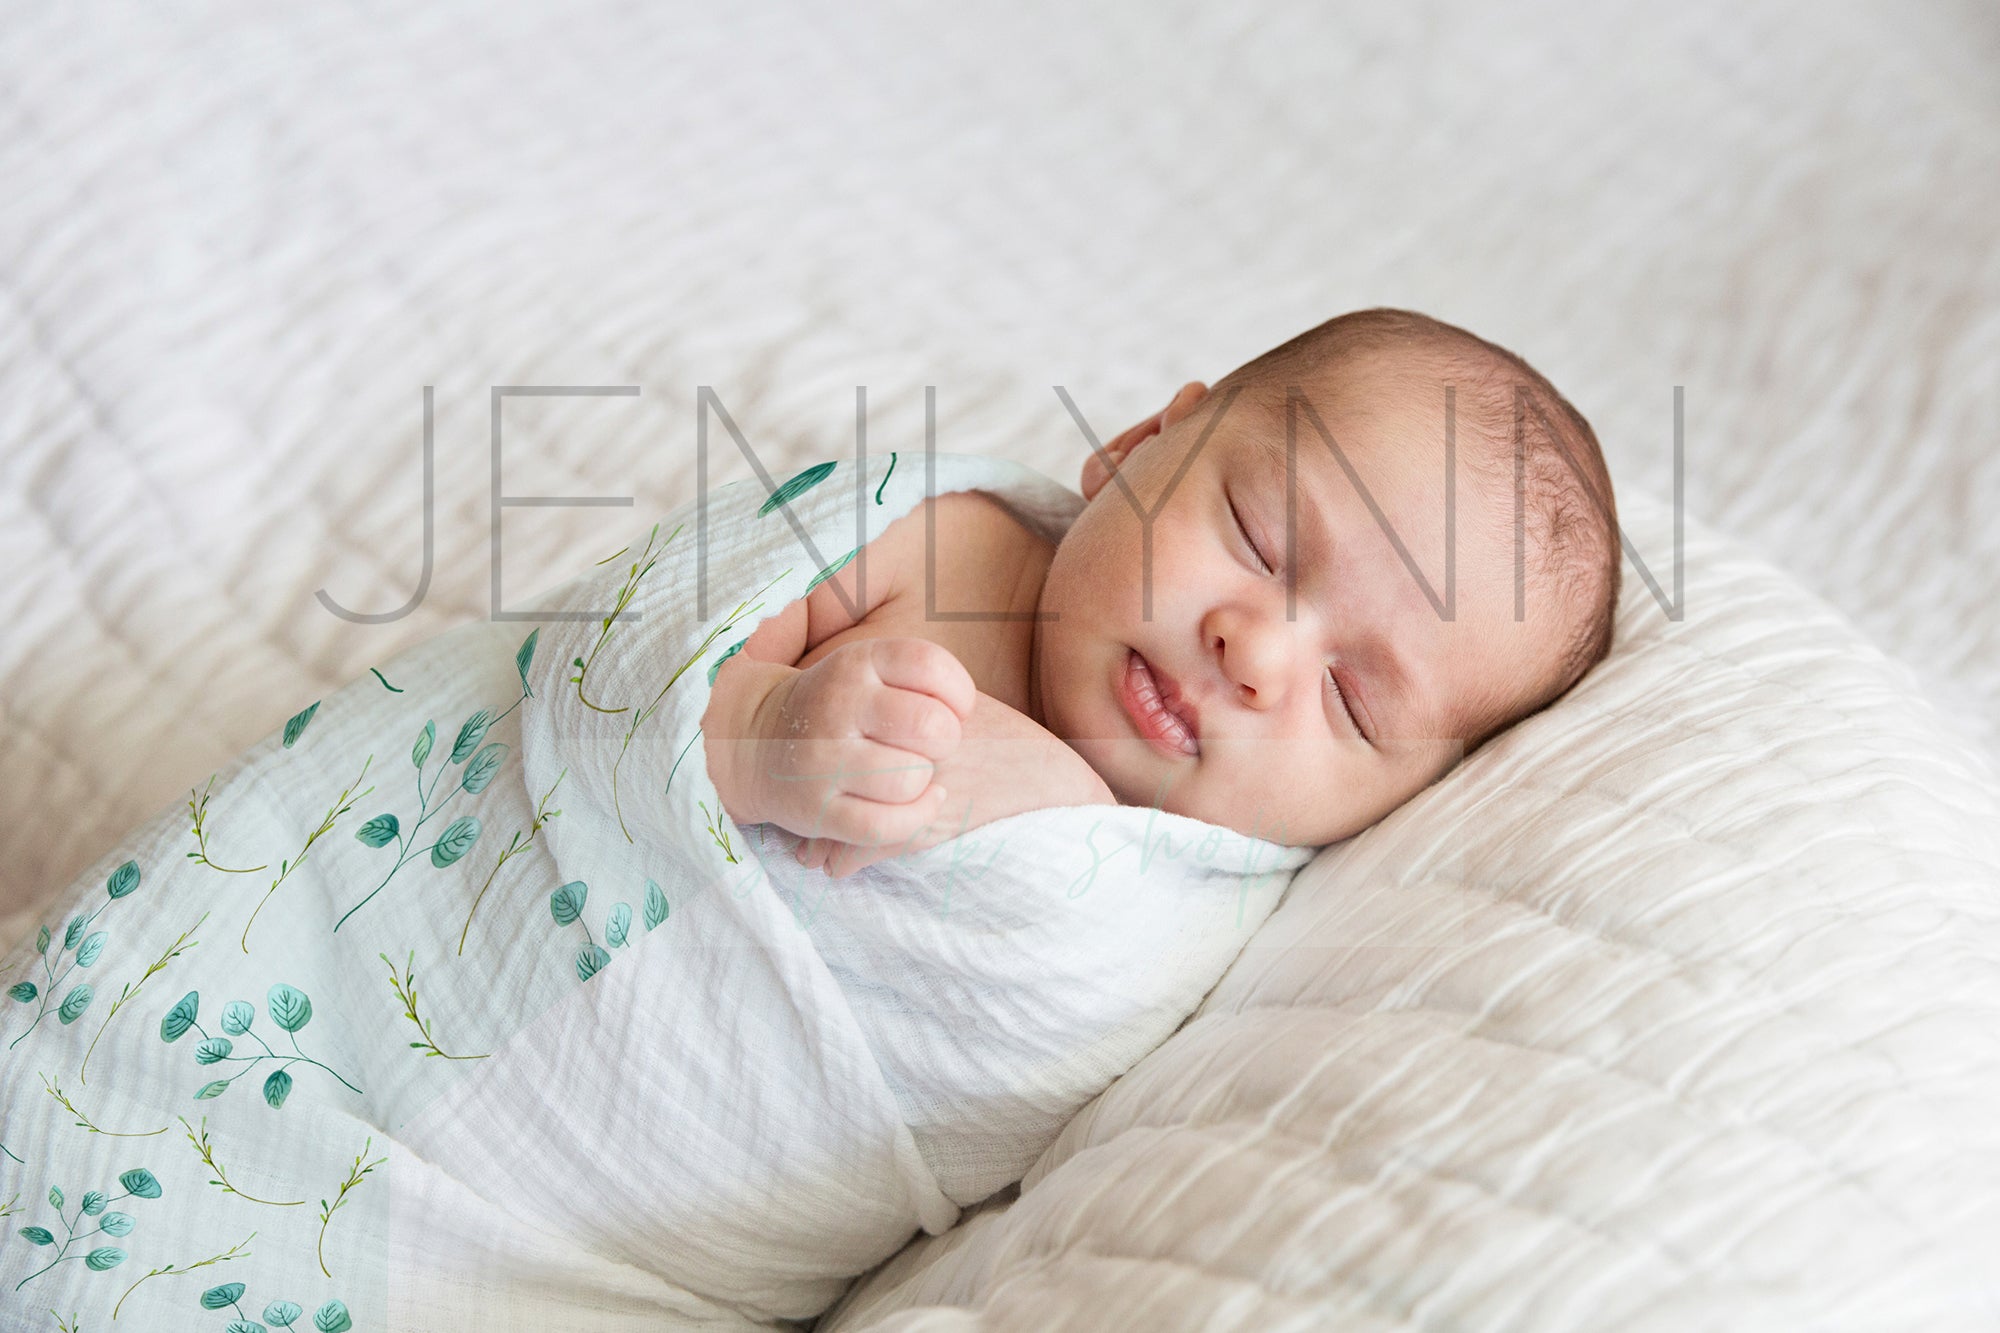 Download Swaddle Baby Boy Blanket Mockup 3 Jenlynn Stock Shop